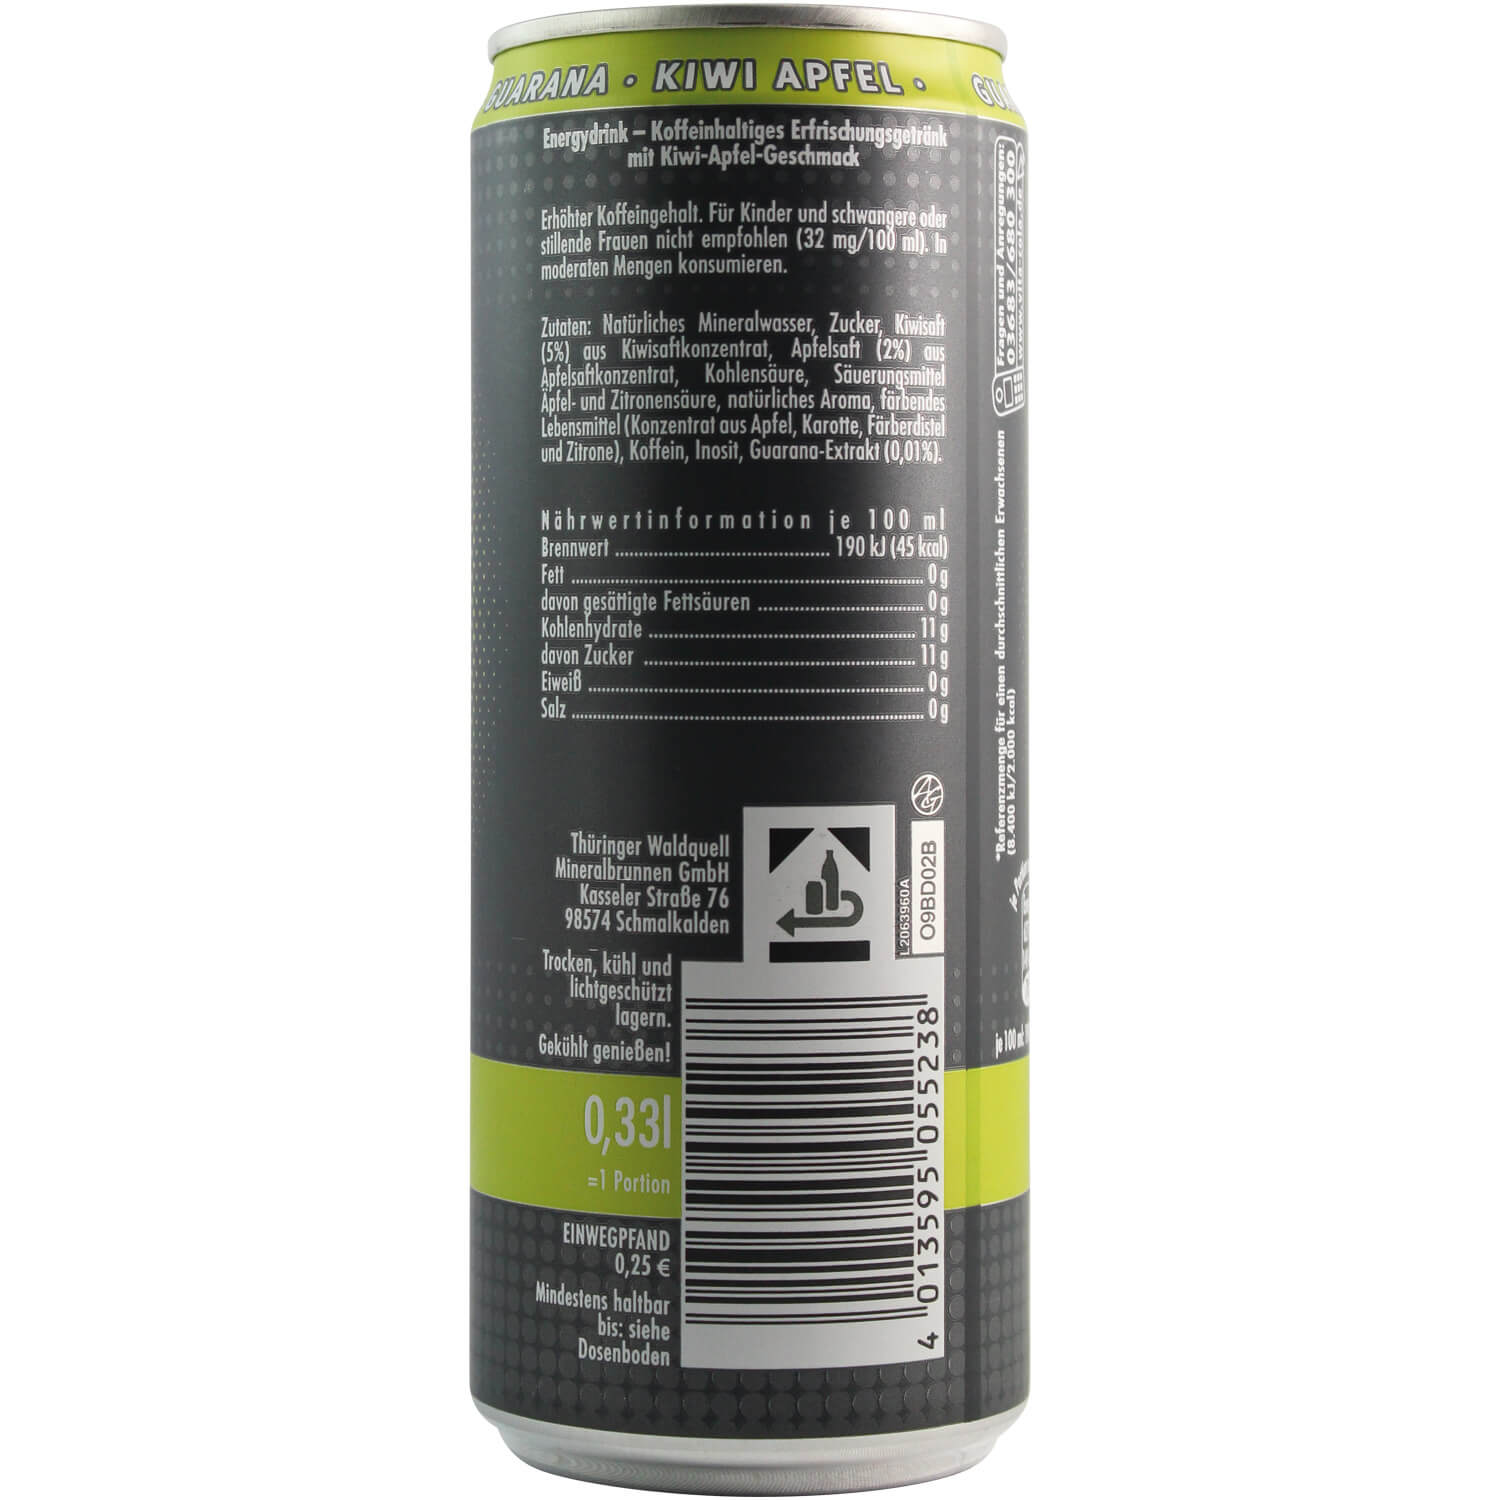 Ossikiste.de | Vita Energy Kiwi-Apfel 0,33 Liter incl. Pfand | online ...